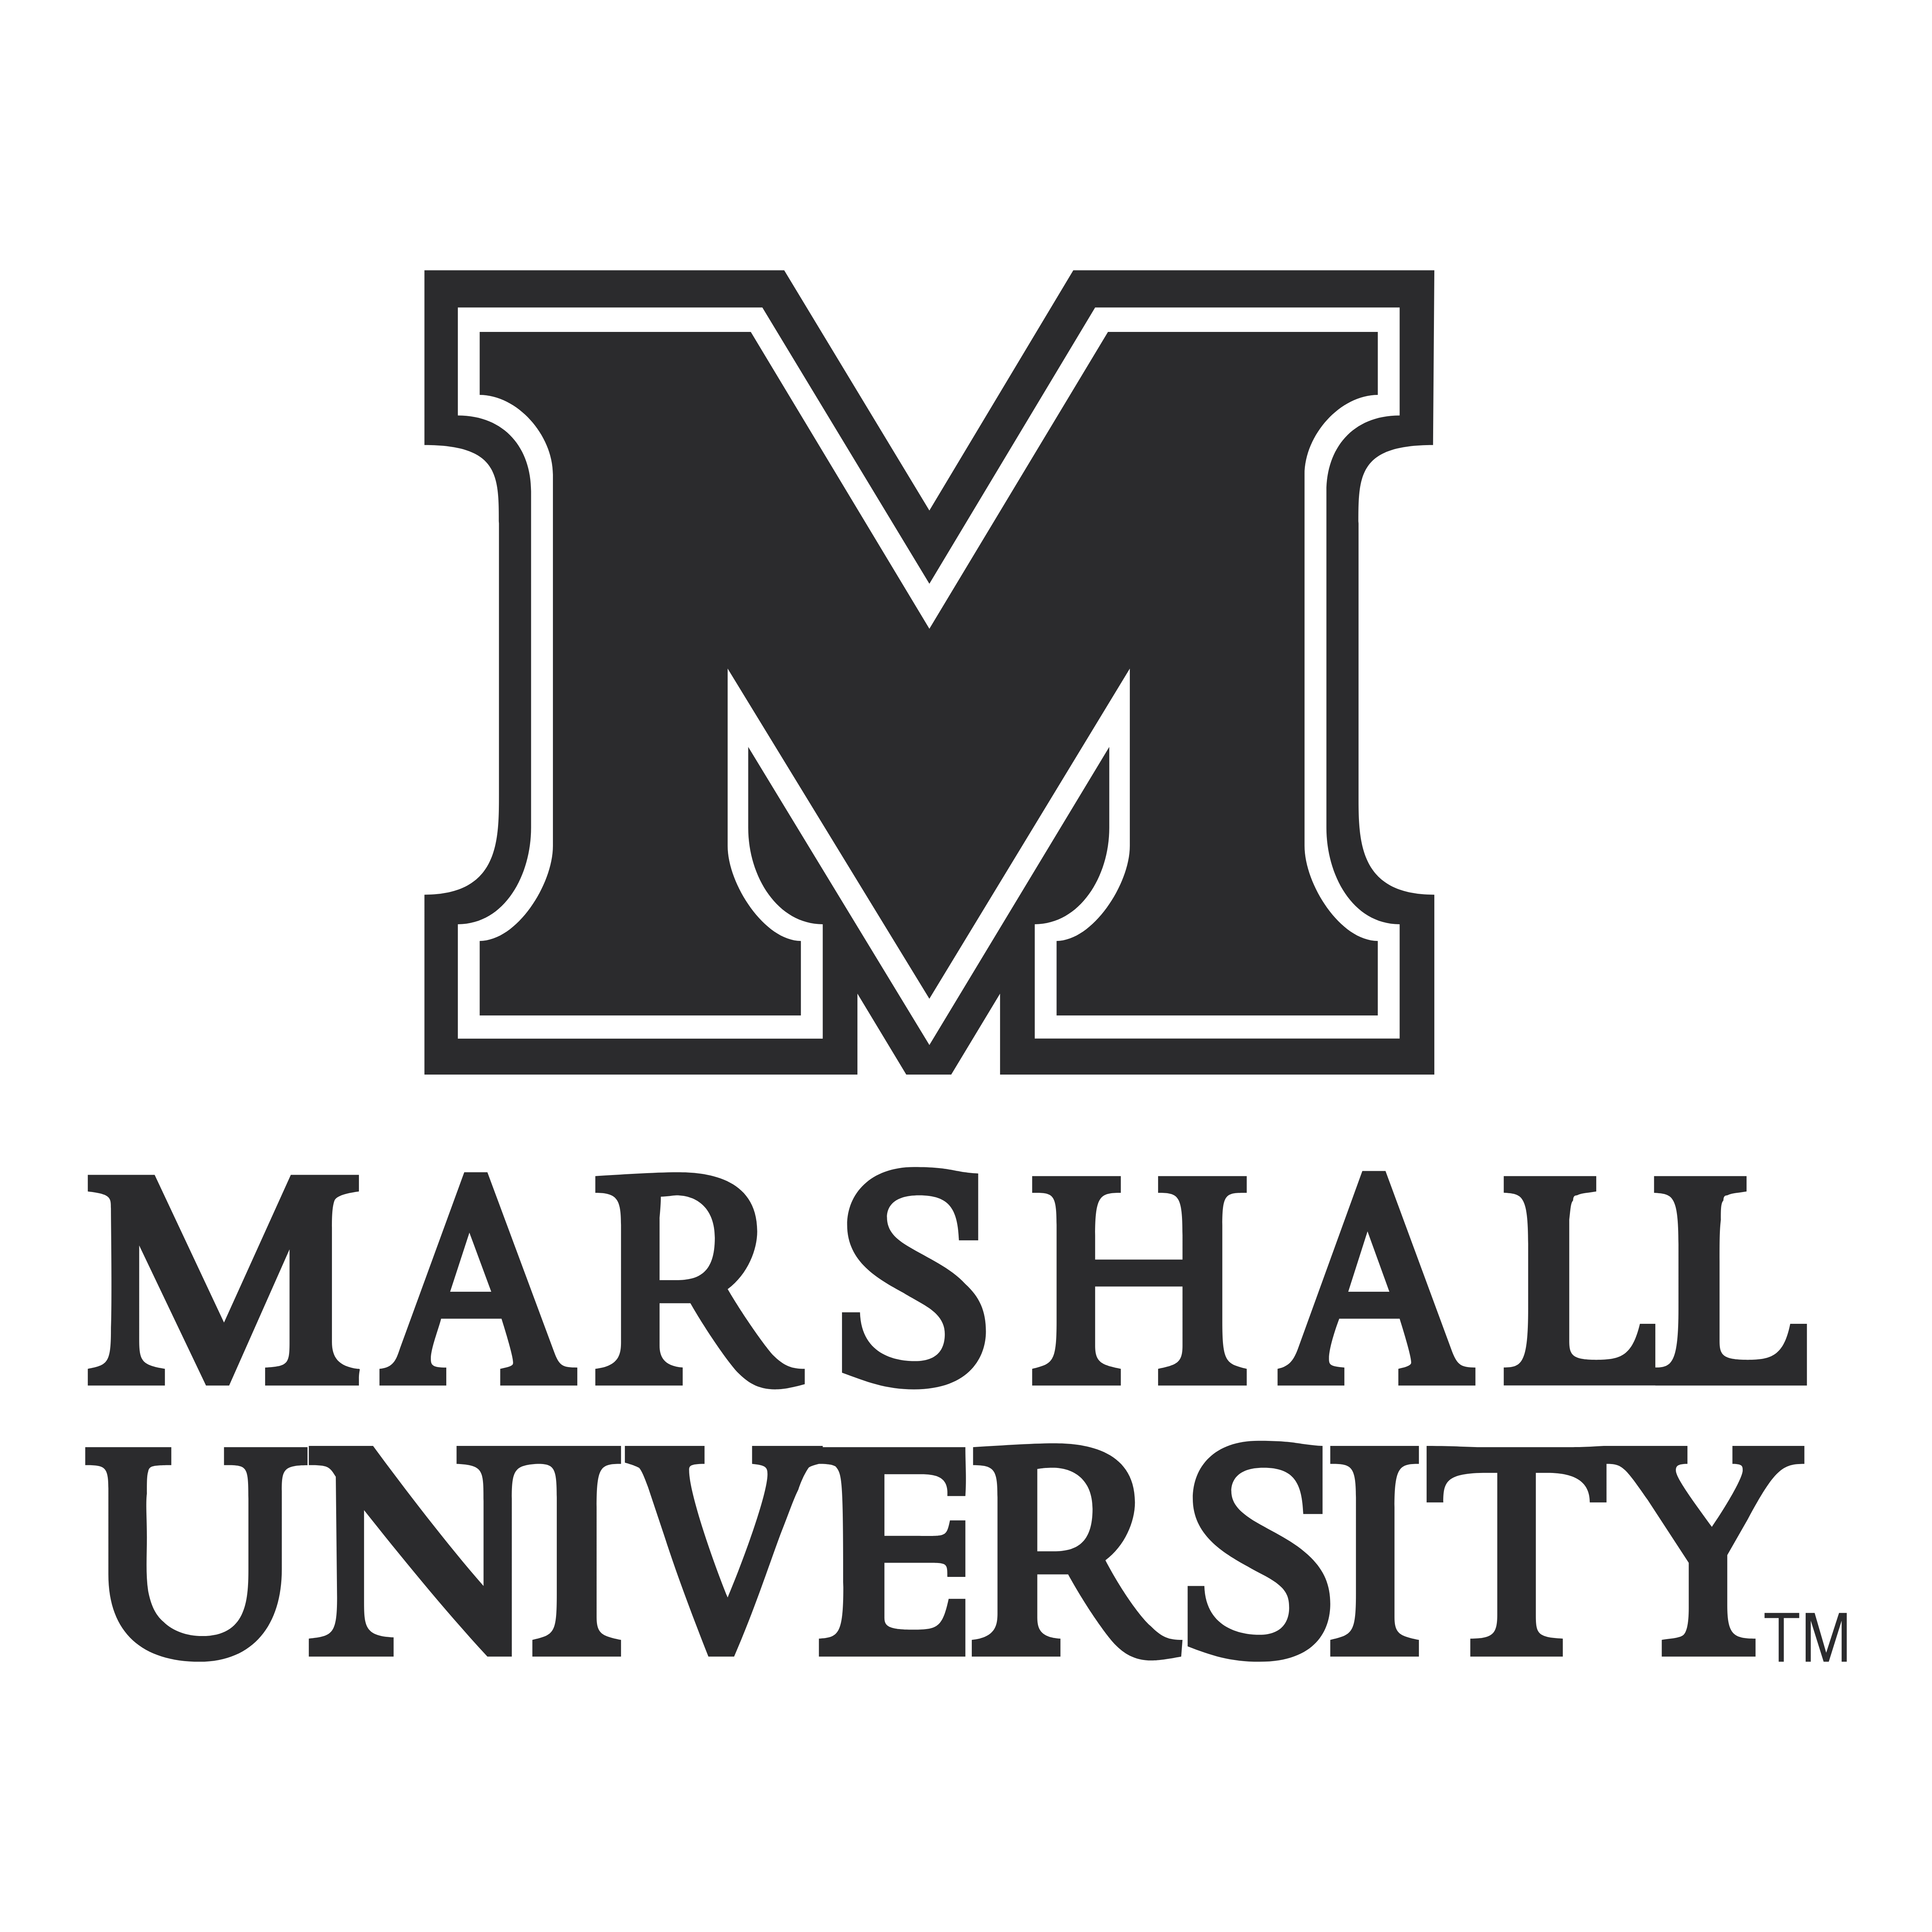 Marshall College Logo